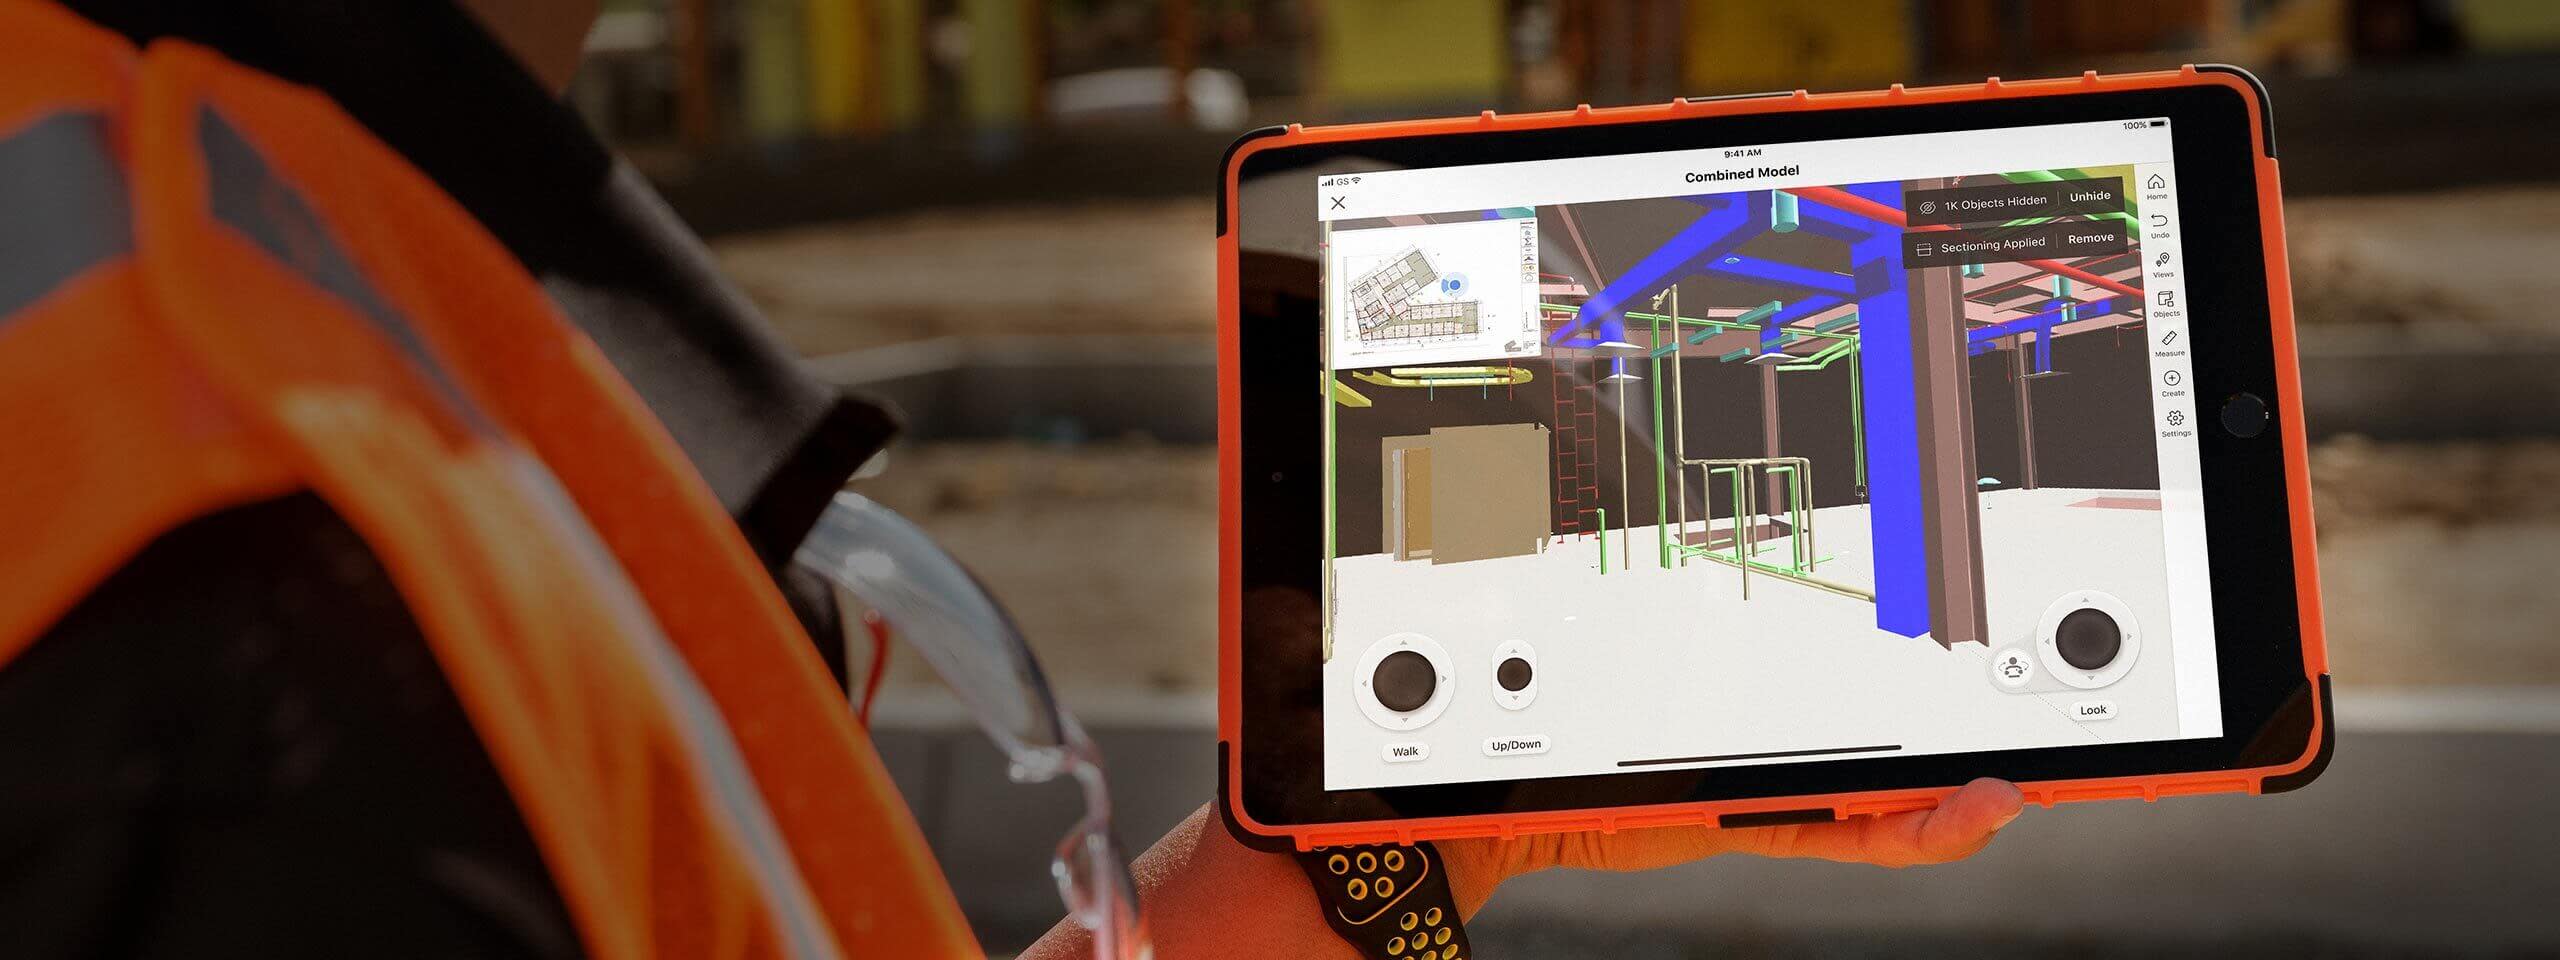 Construction worker using BIM on an iPad at a jobsite